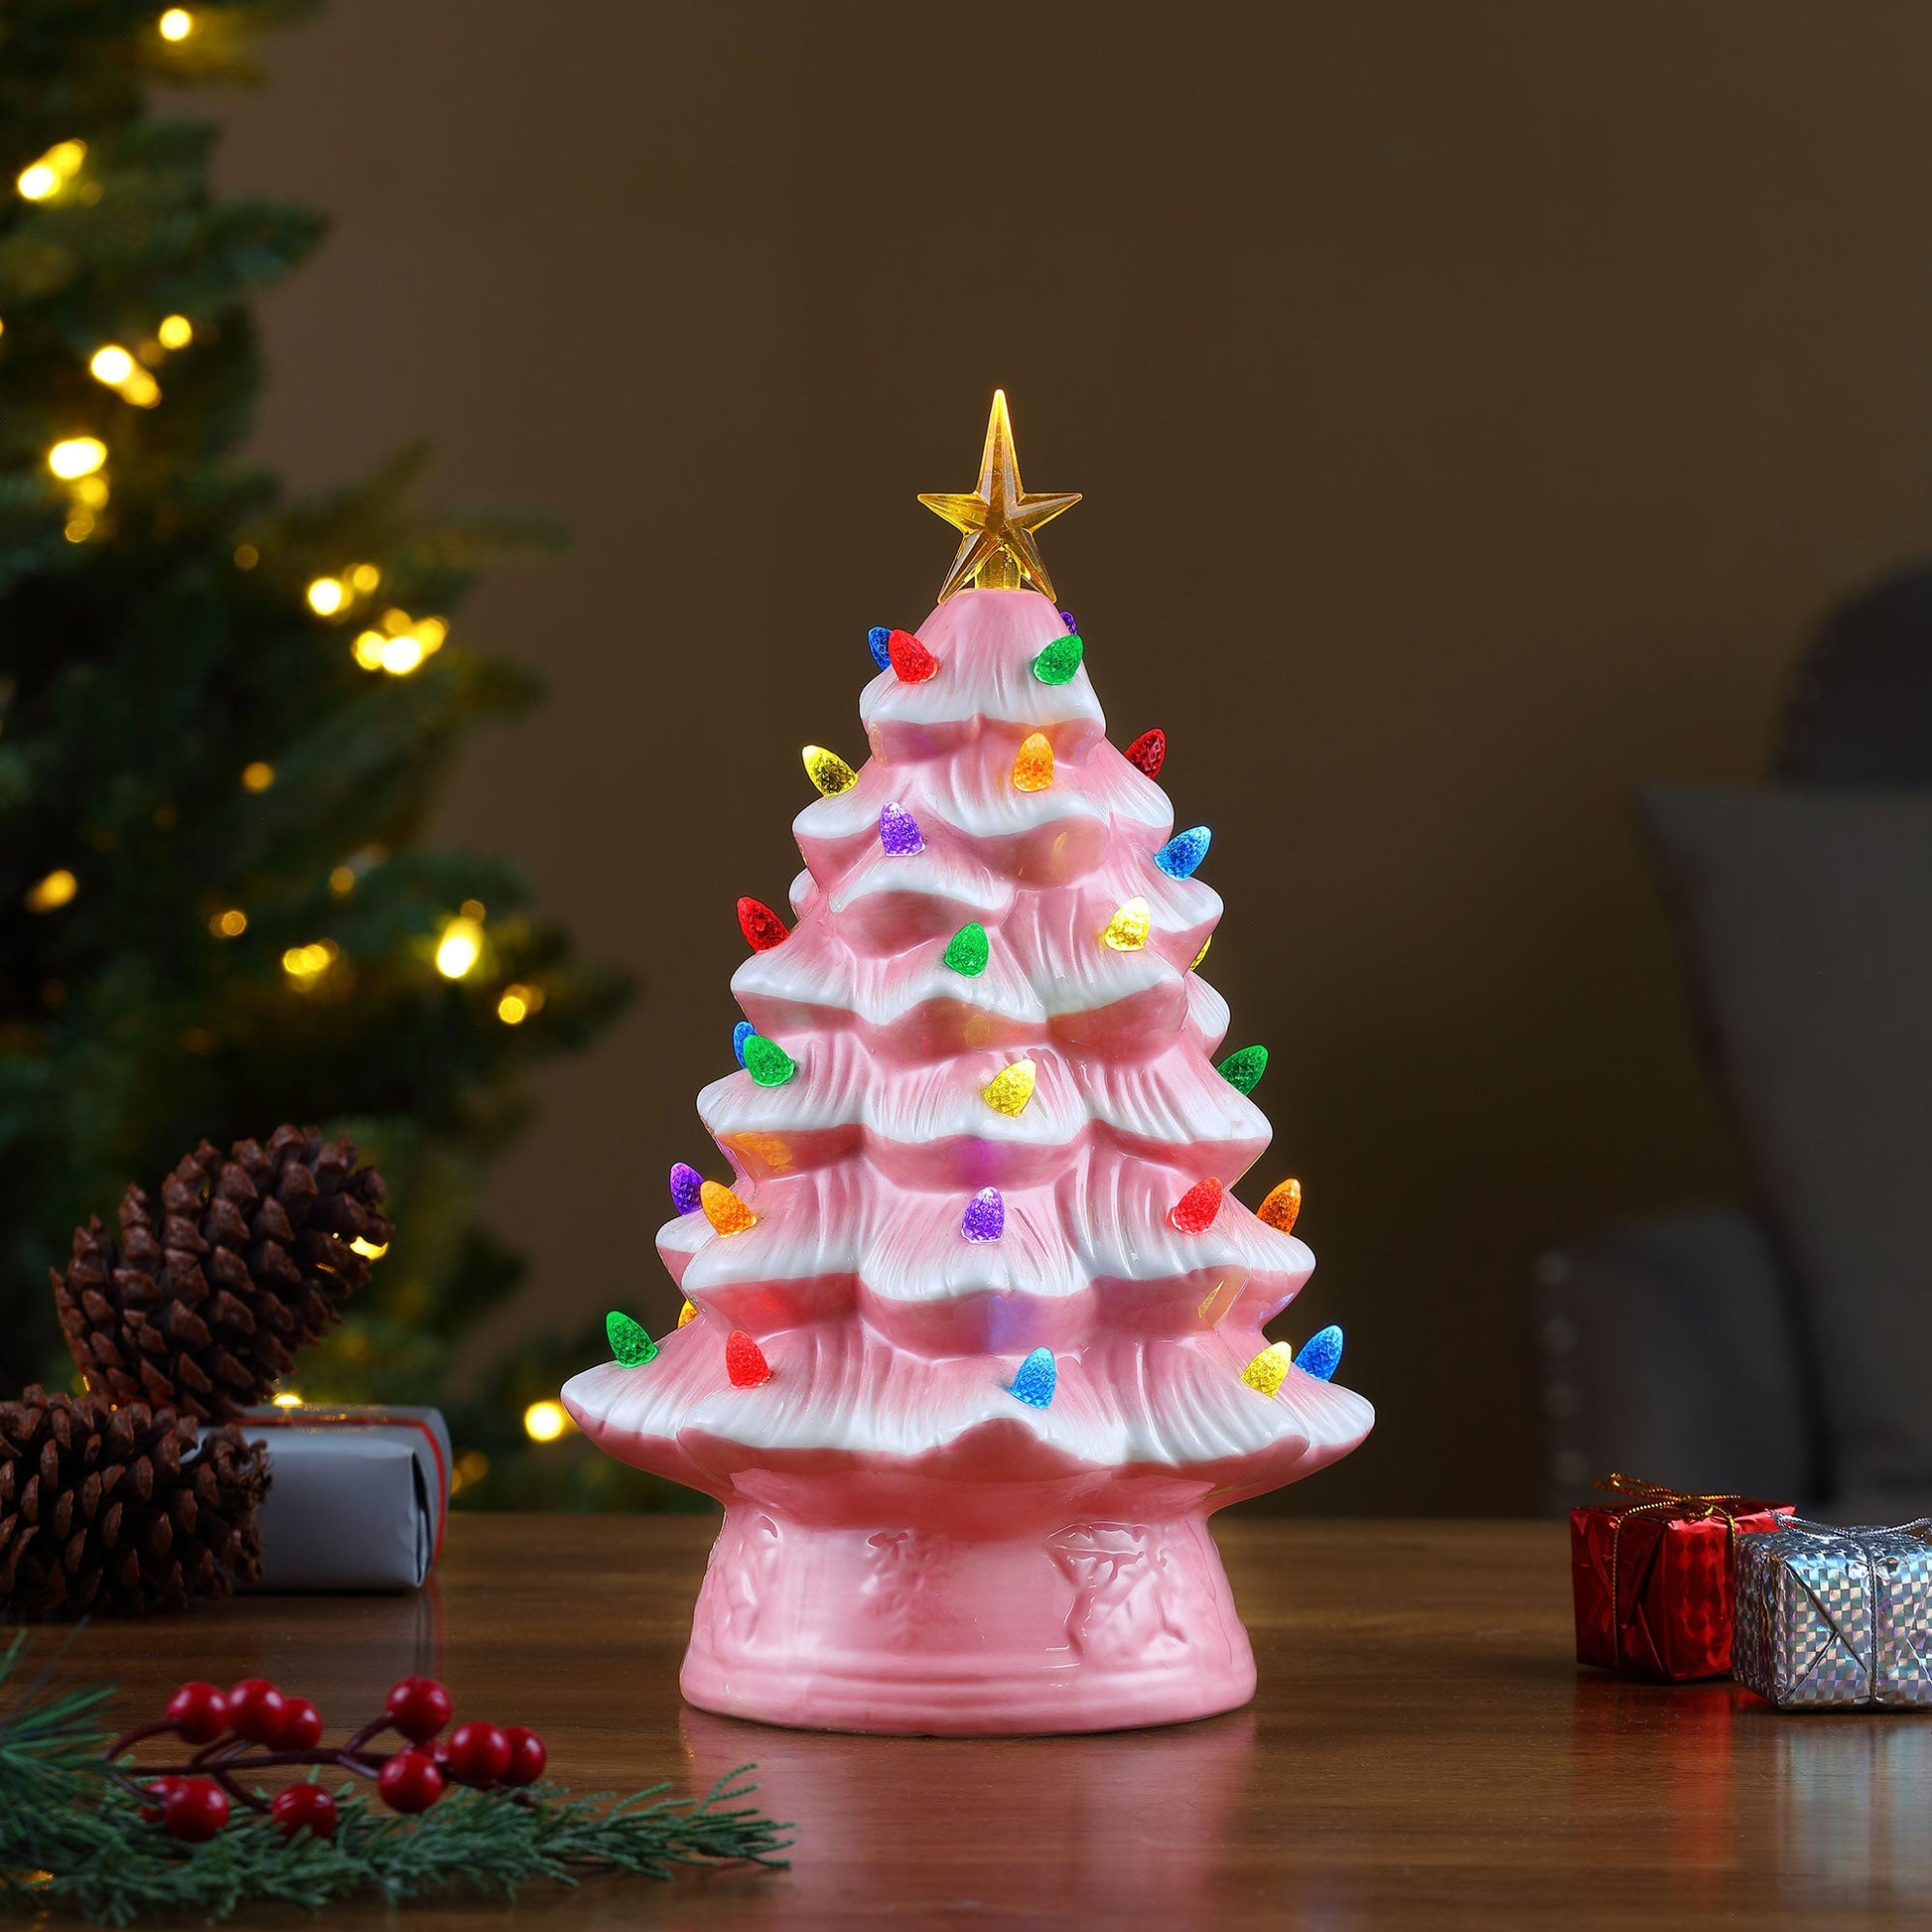 Mr. Christmas Set of 3 Mini Nostalgic Ceramic Christmas Trees